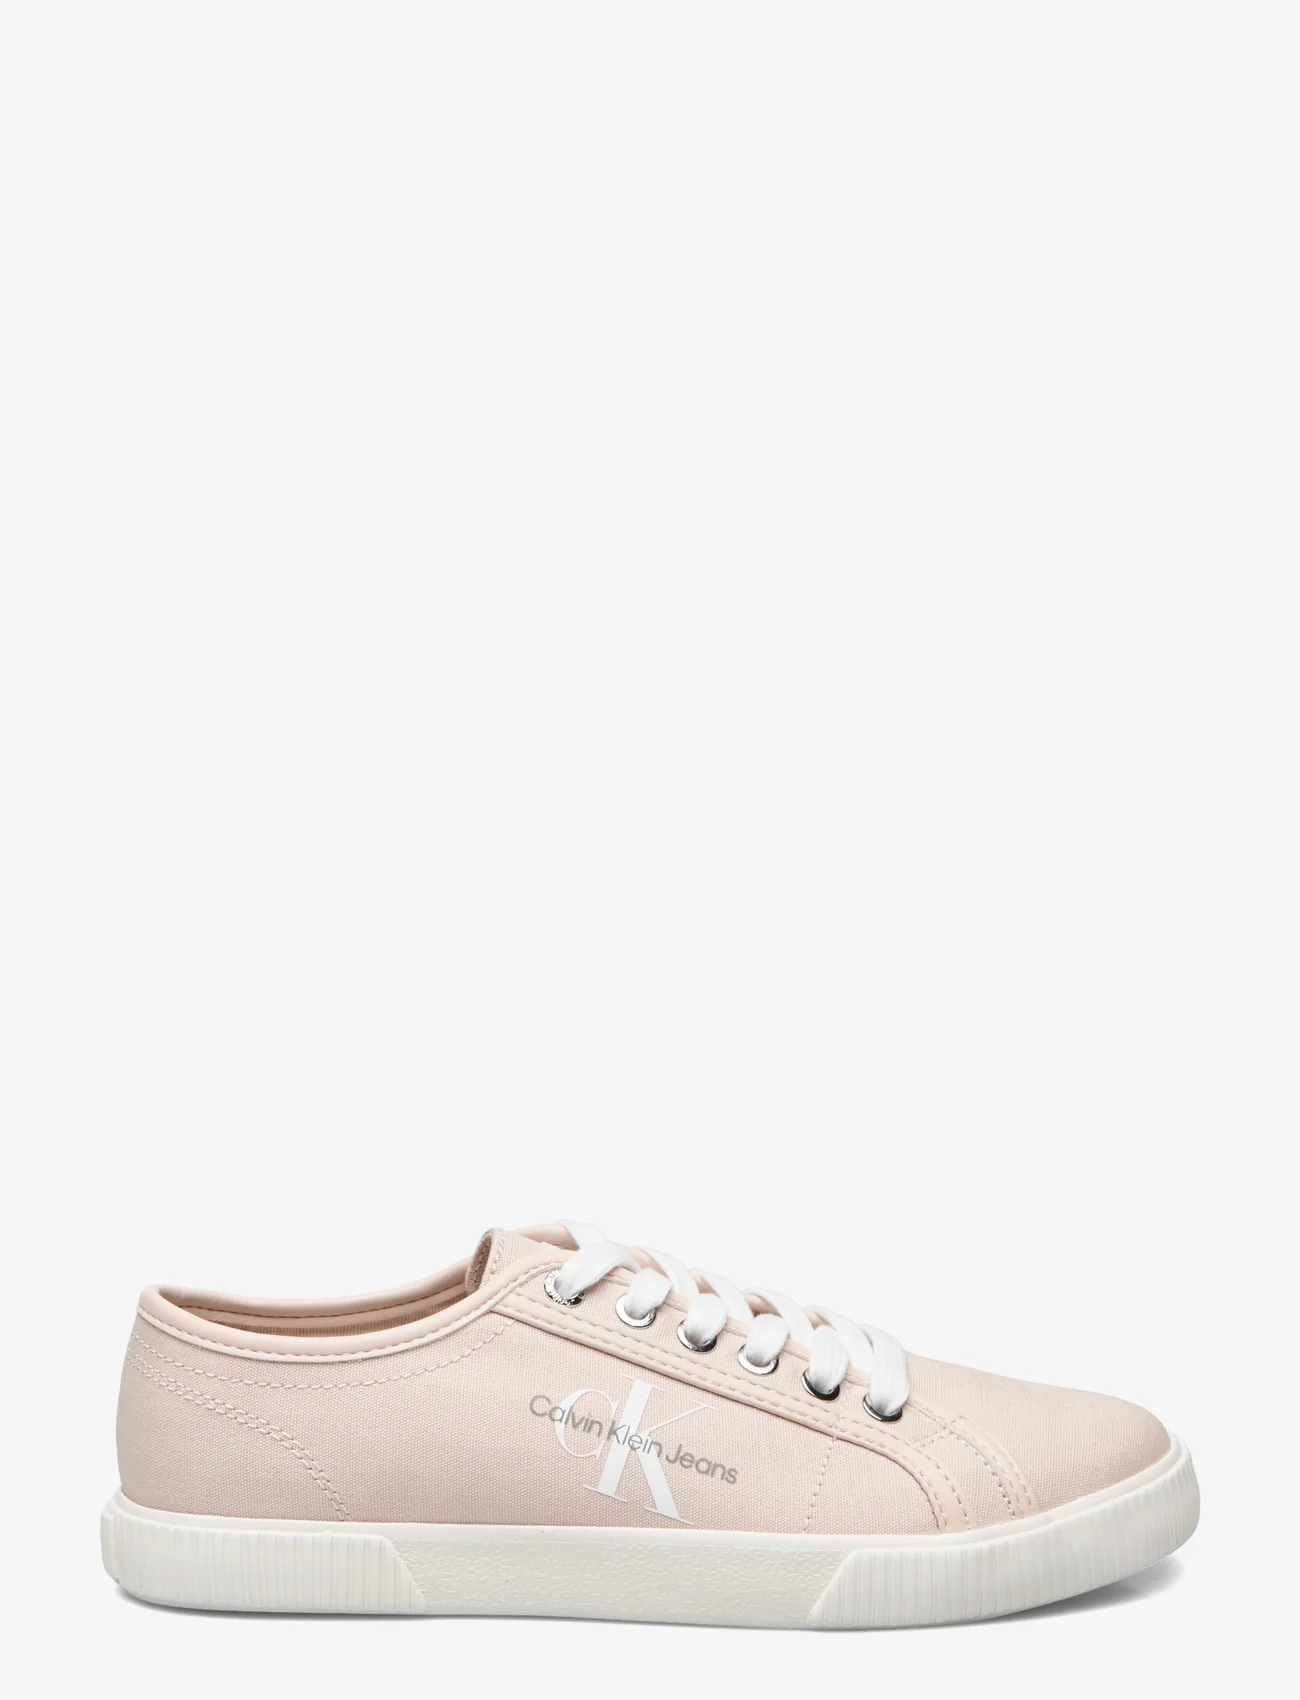 Calvin Klein - ESS VULC MONO W - lage sneakers - whisper pink/bright white - 1